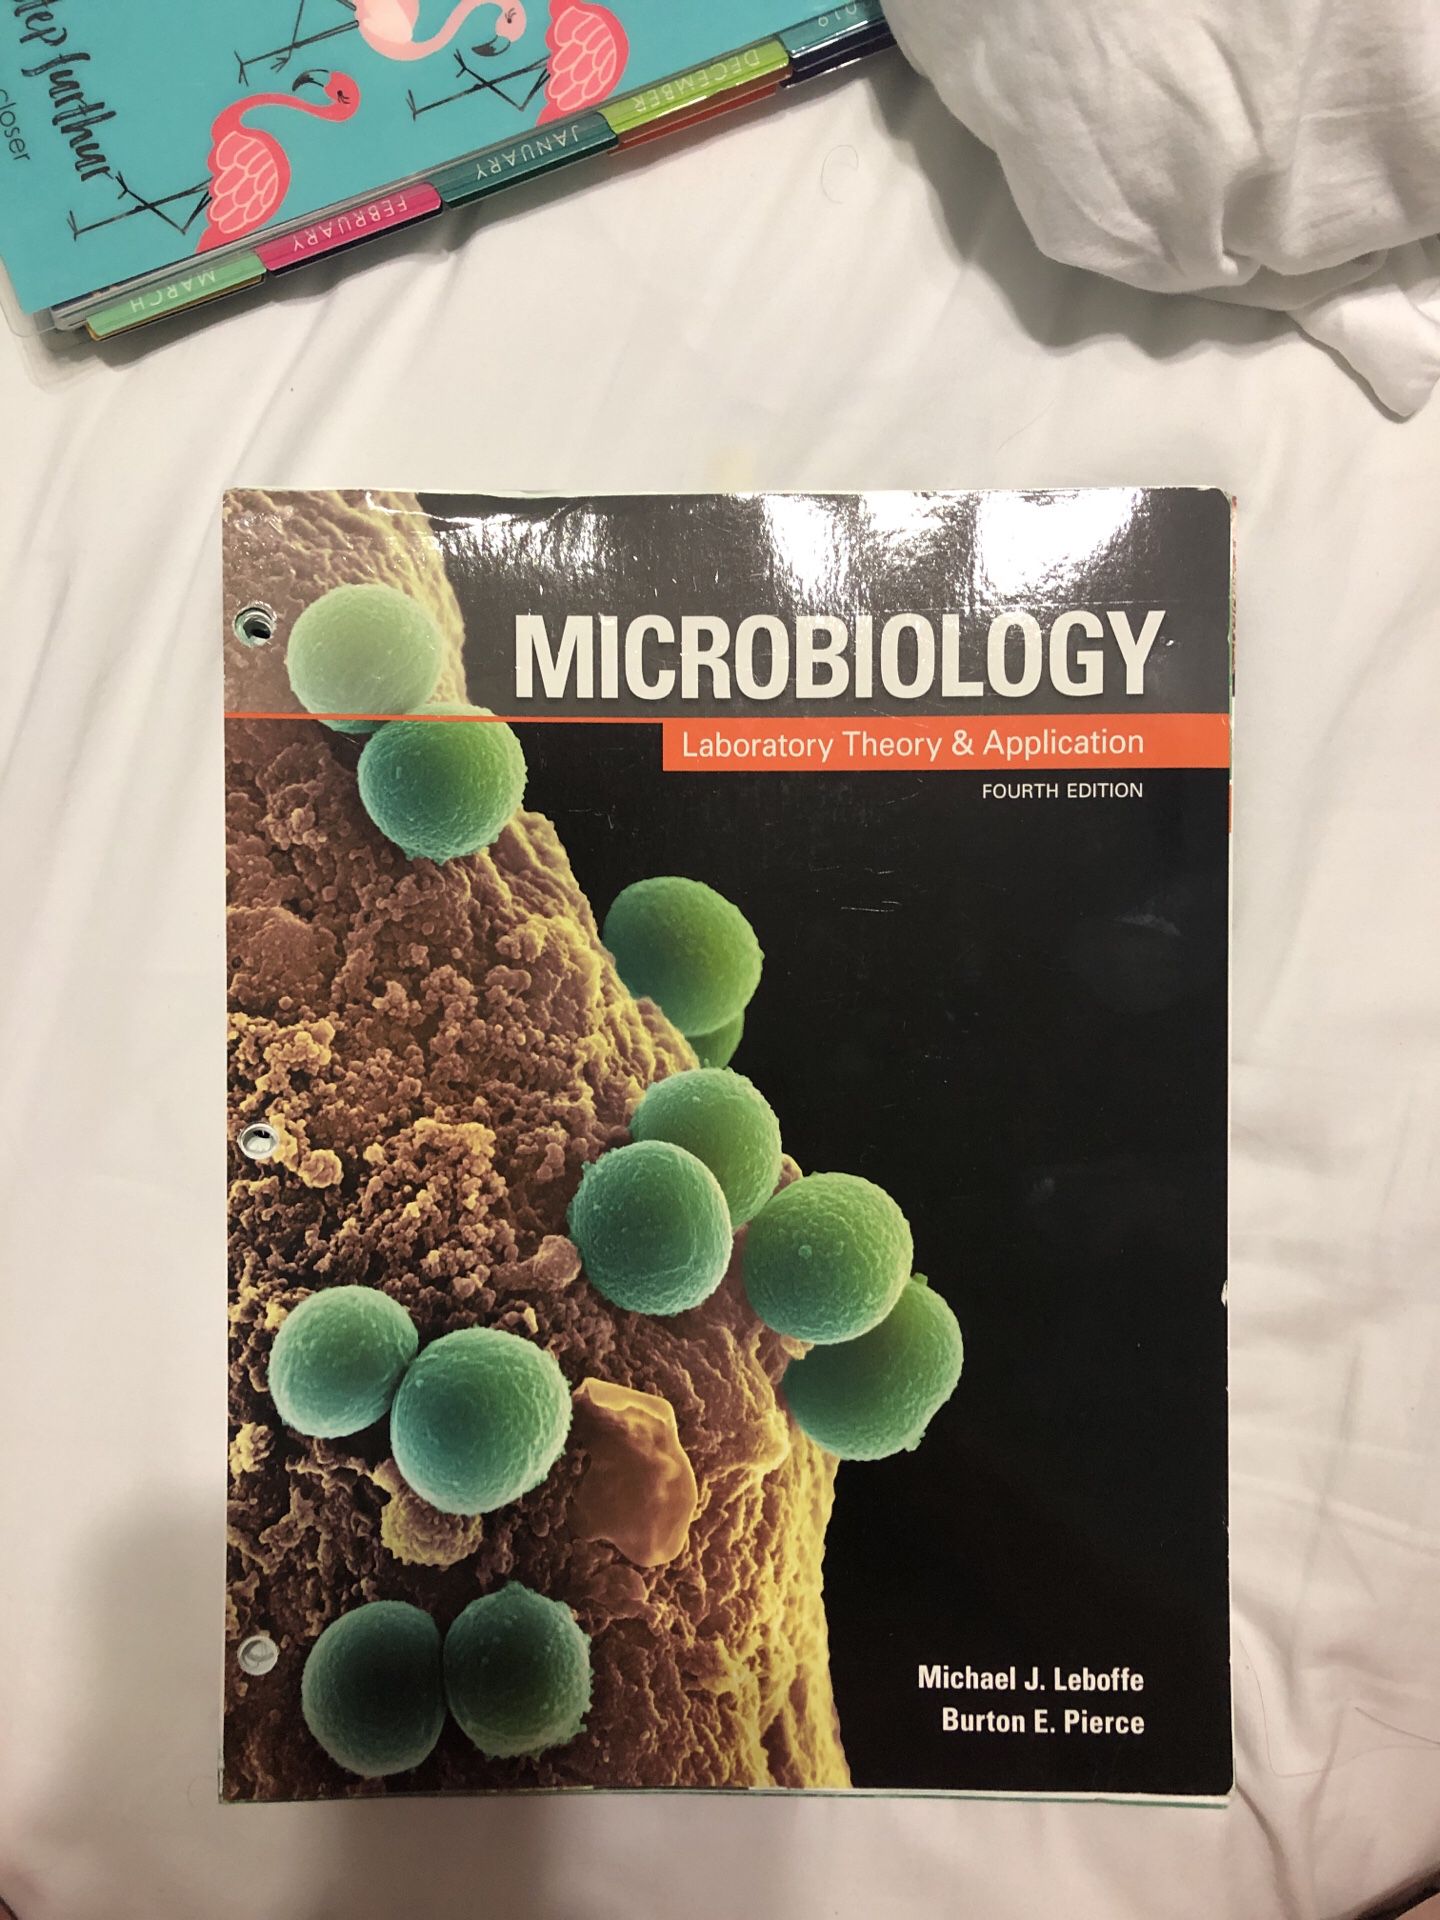 Microbiology book